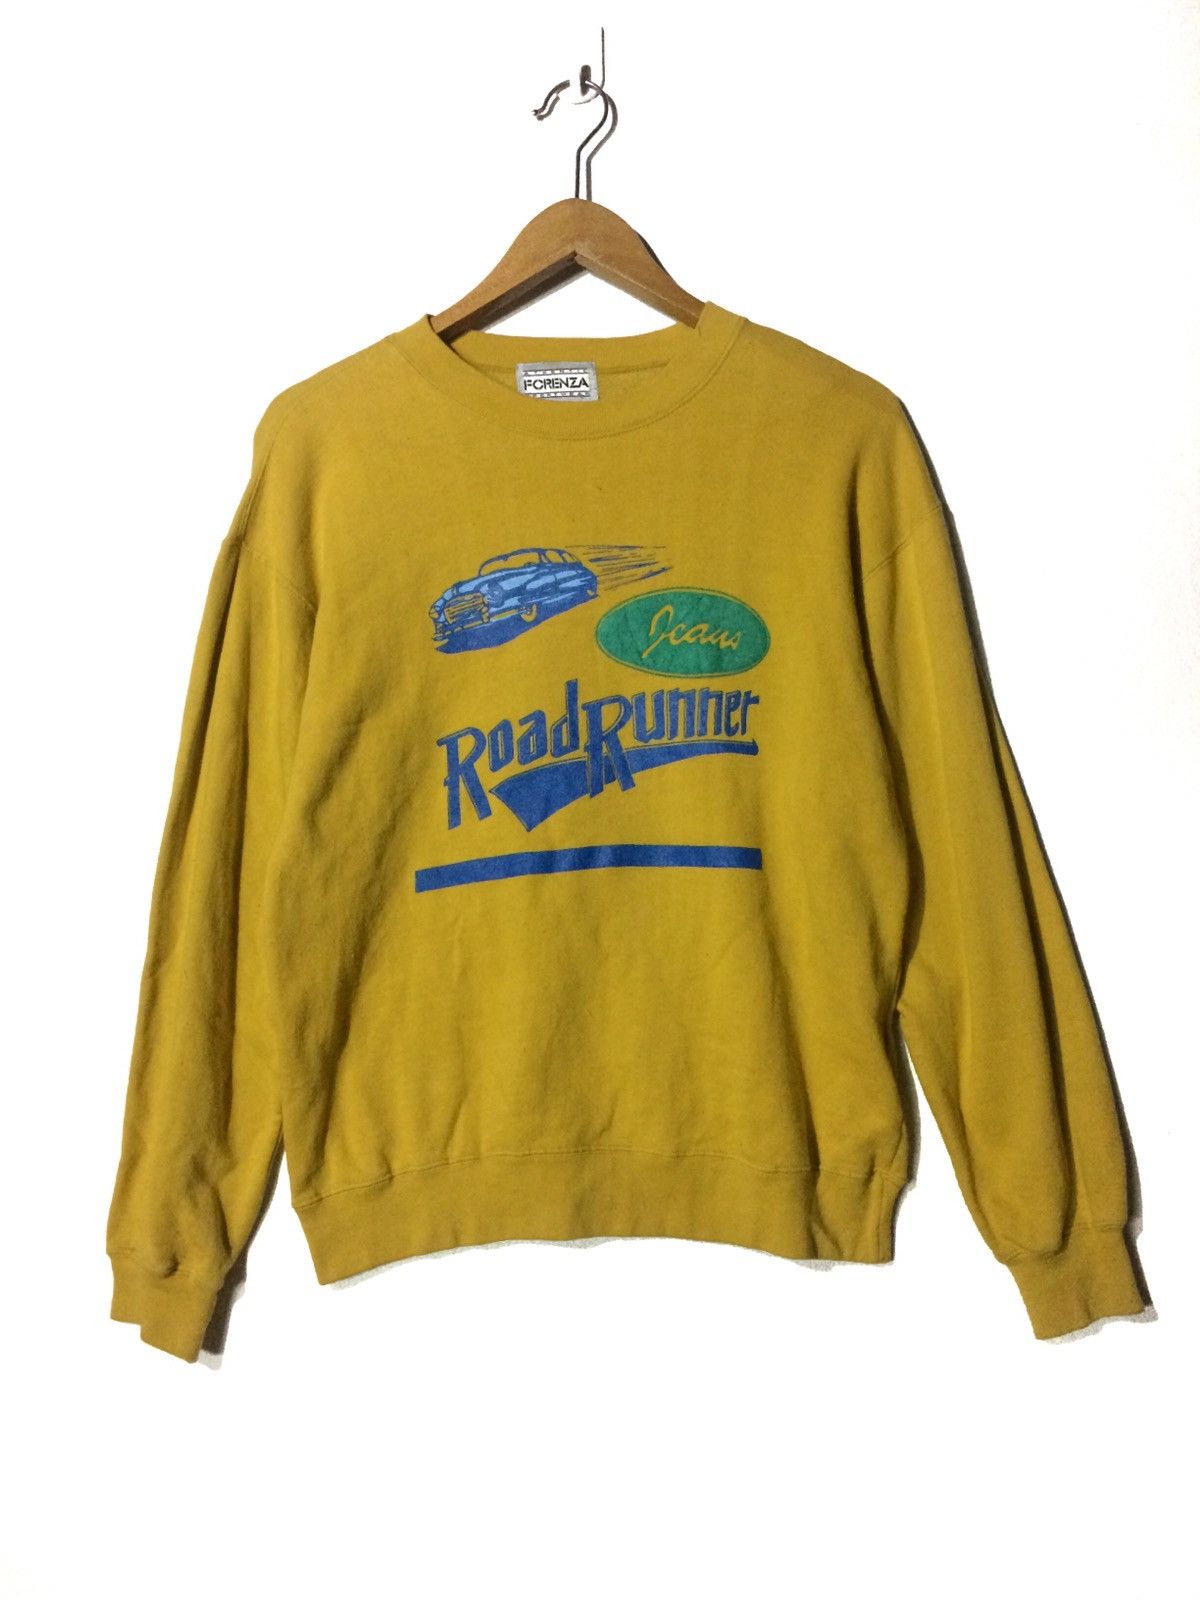 Vintage Authentic Forenza Sportwear Sweatshirt | Grailed